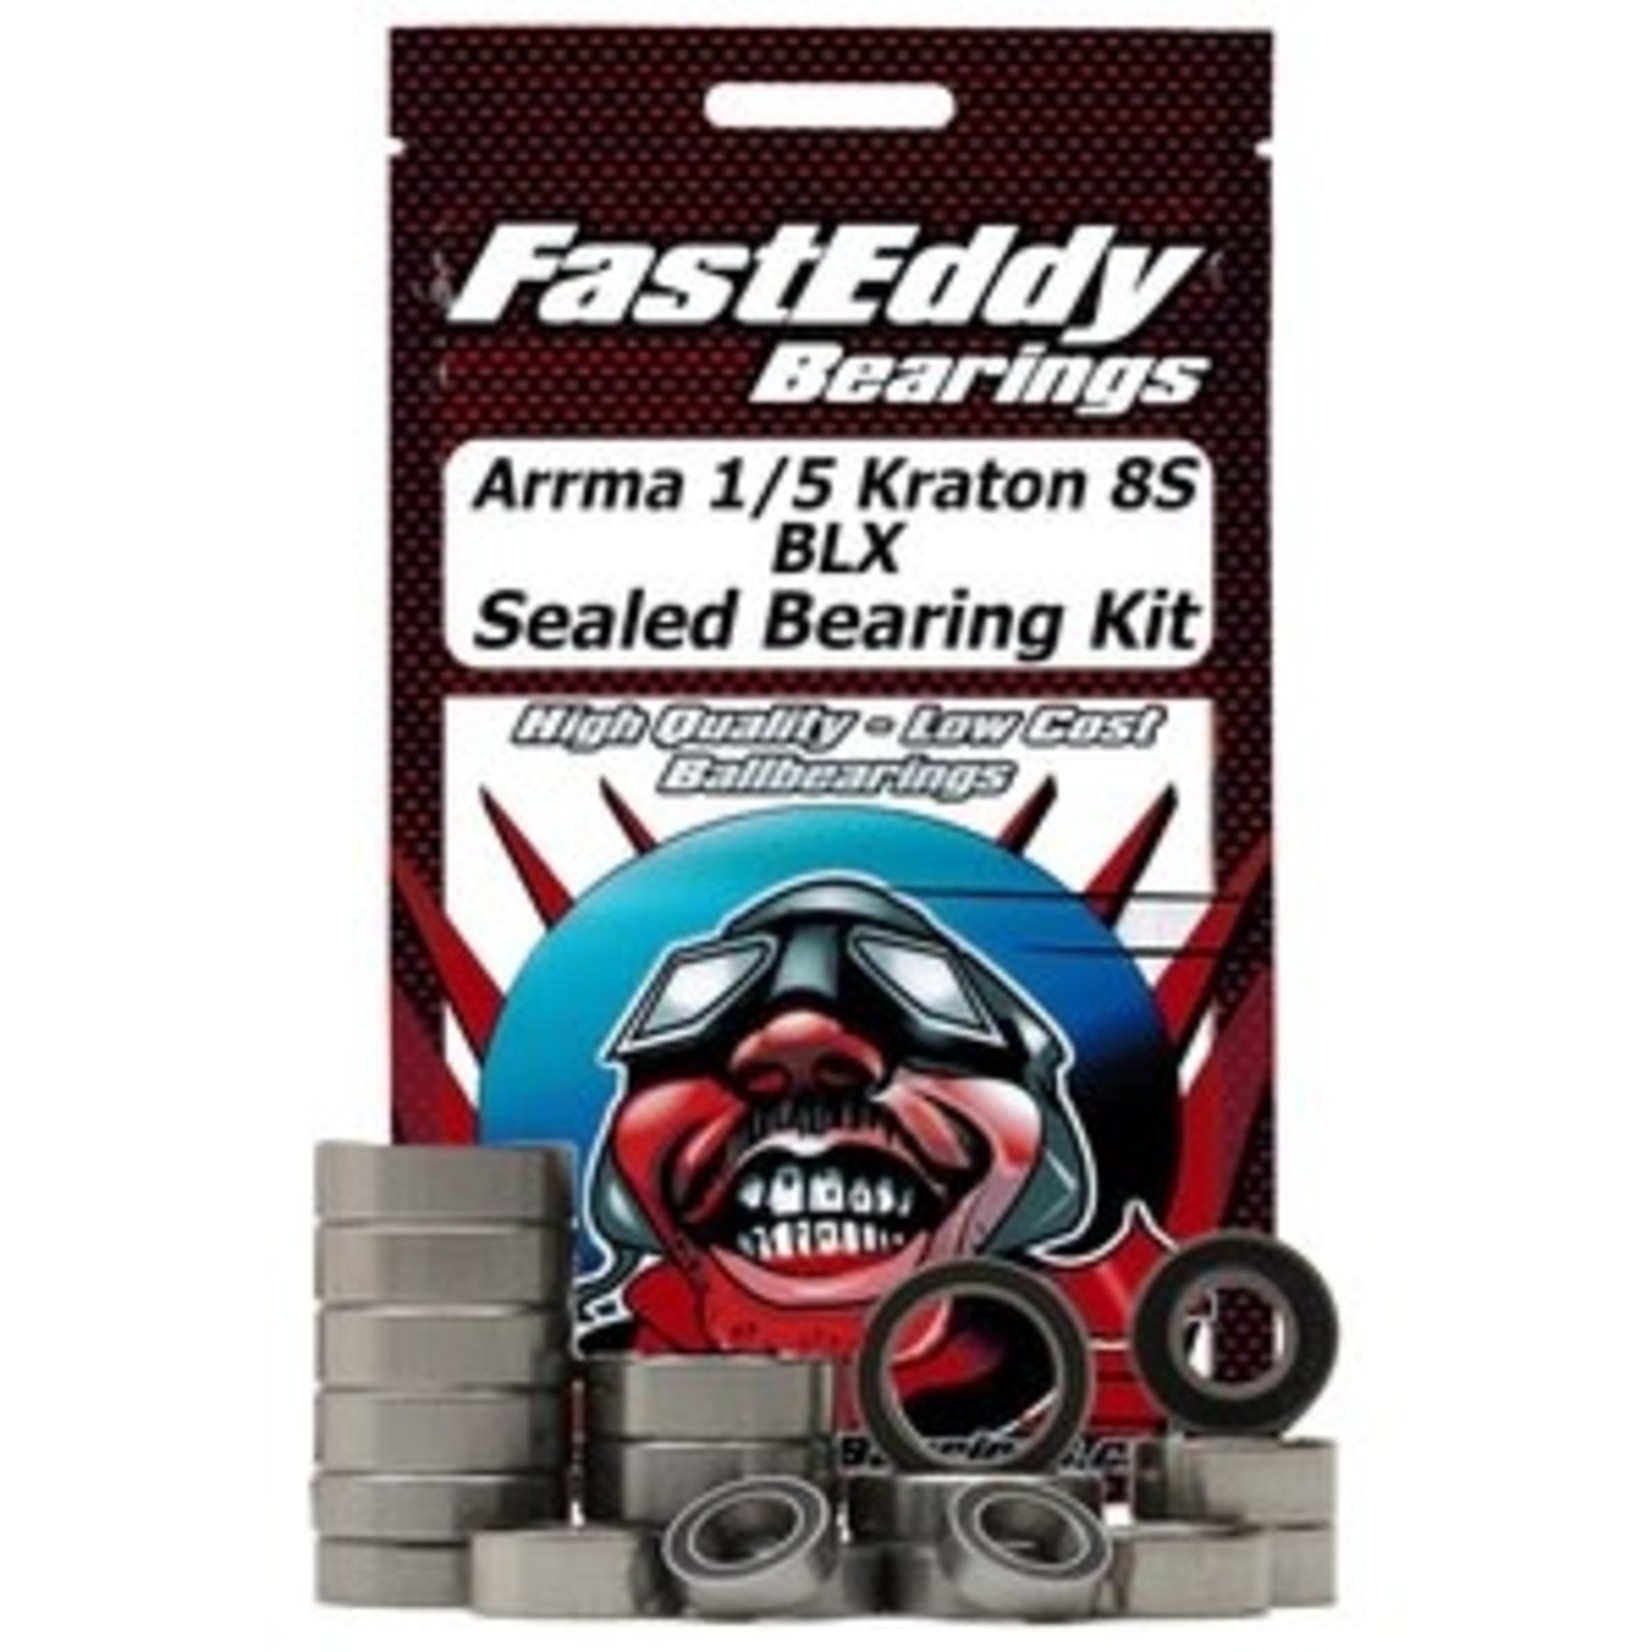 Fast Eddy Arrma 1/5 Kraton 8S BLX Sealed Bearing Kit